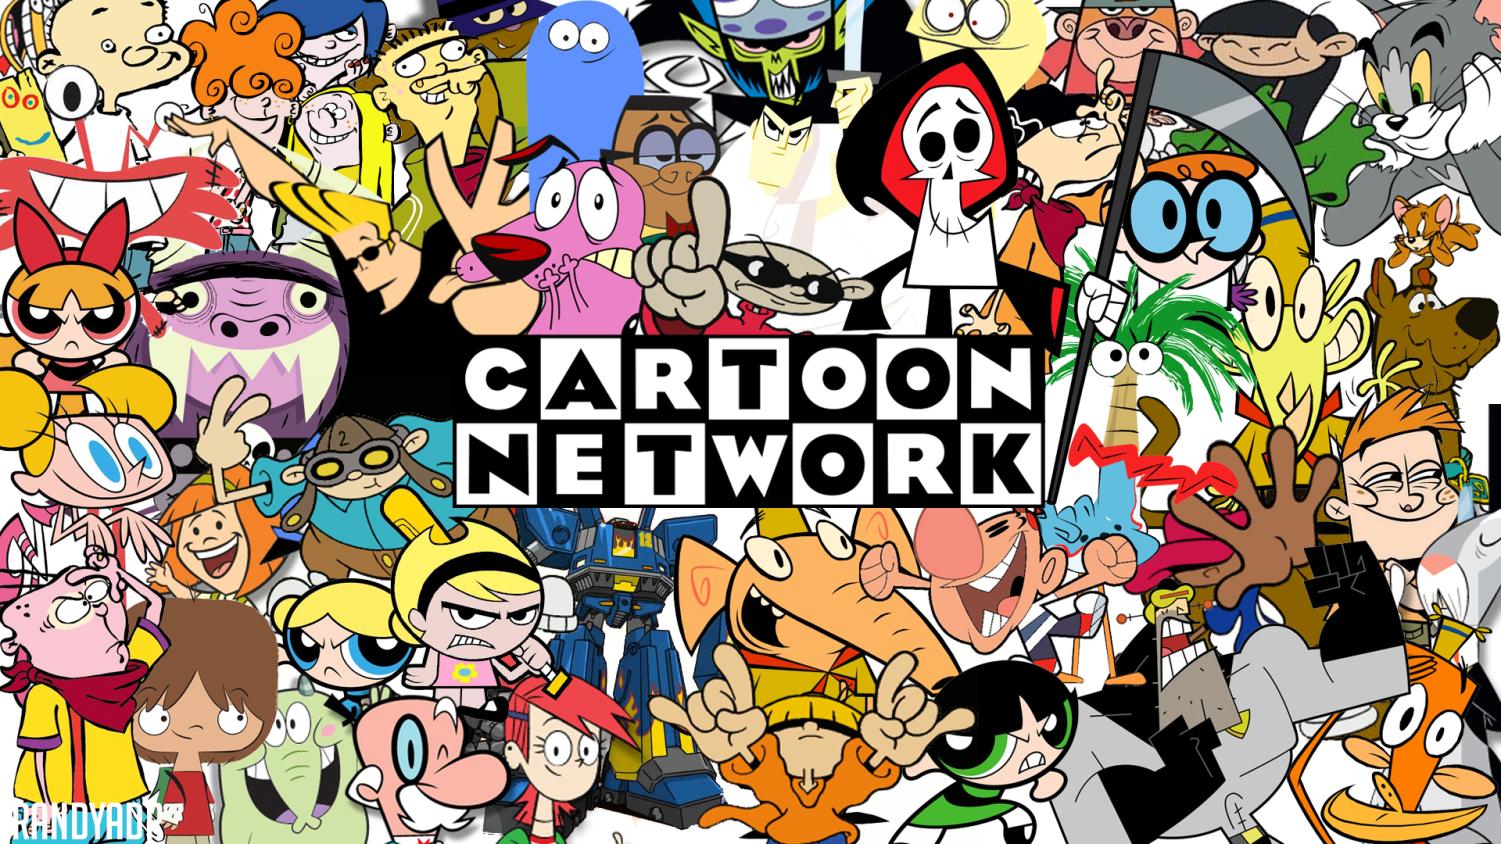 Regular Show  Regular show, Old cartoon shows, Old cartoon network